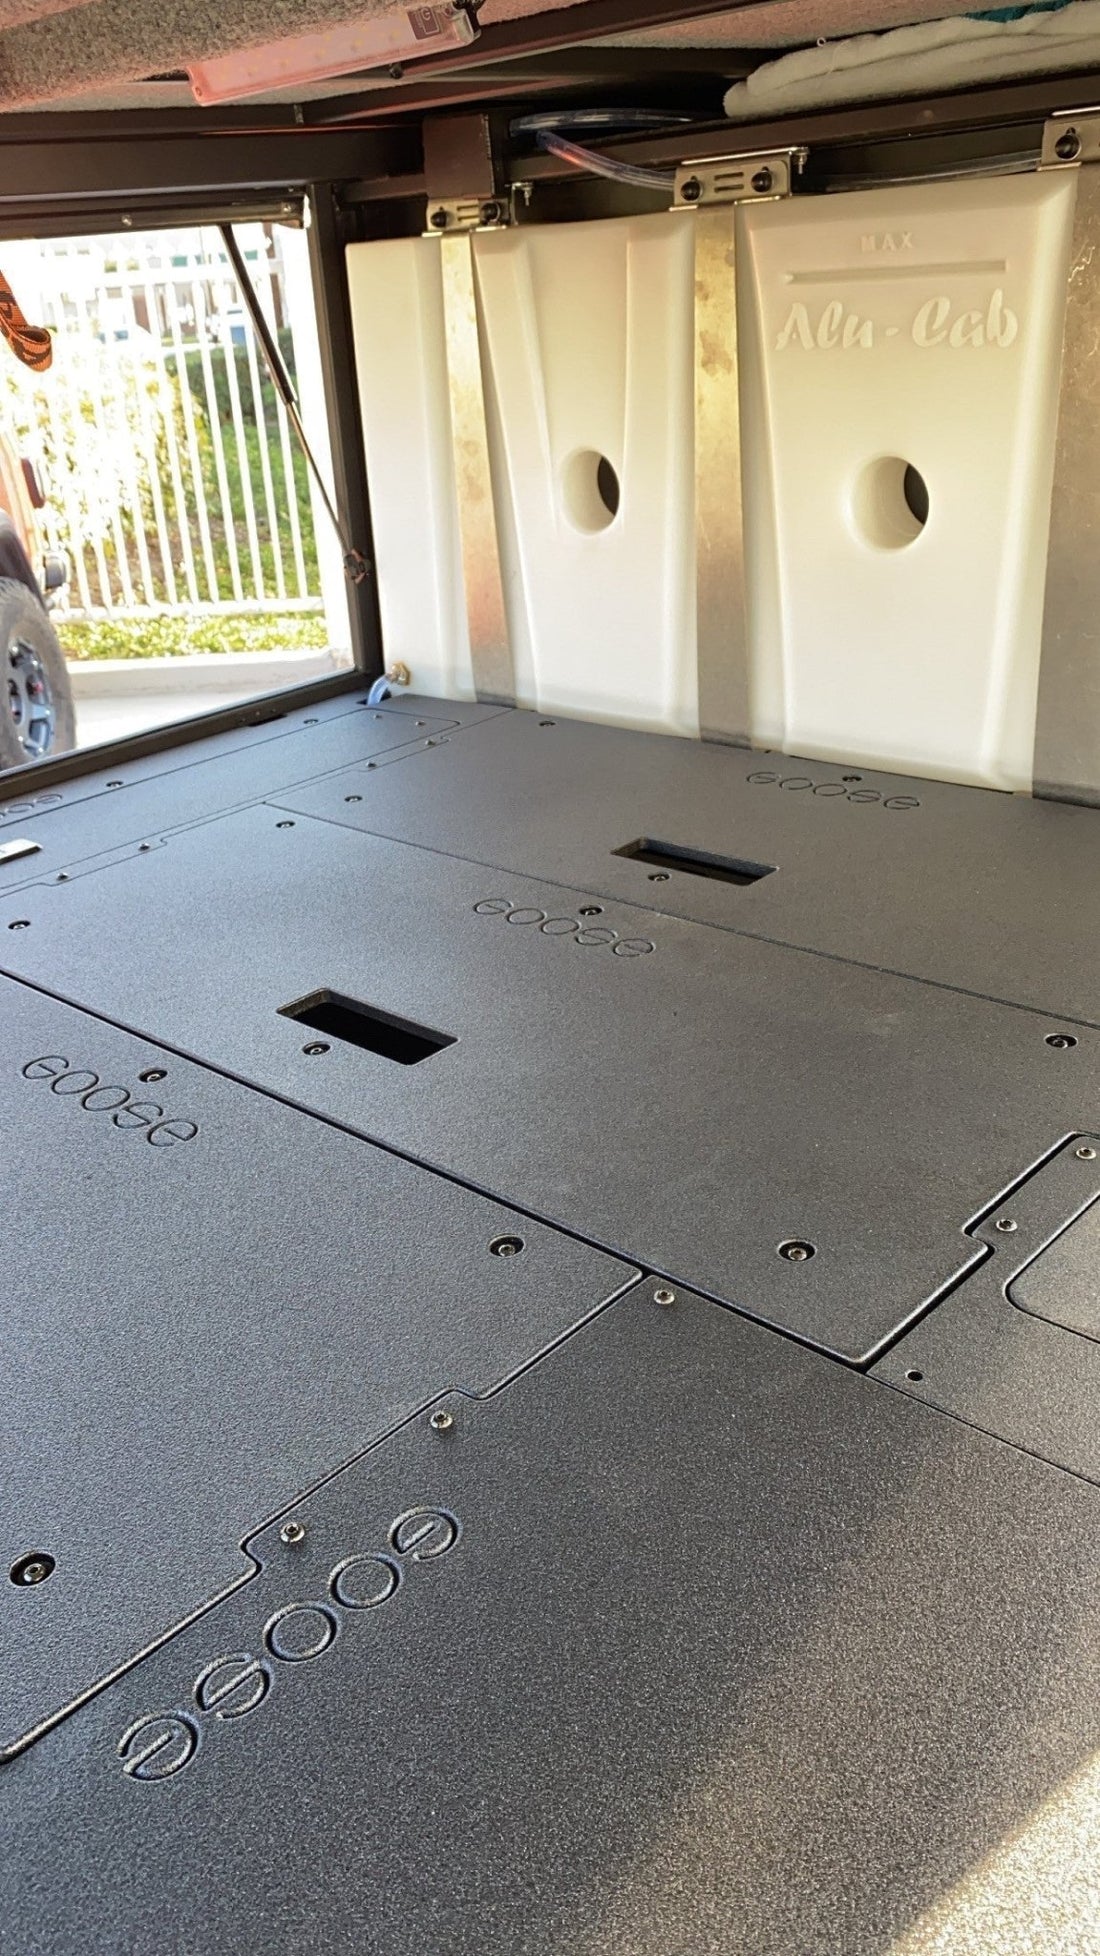 Goose Gear Alu-Cab Canopy Camper - Sleep Deck Panel - Double Drawer Module to Utility Module